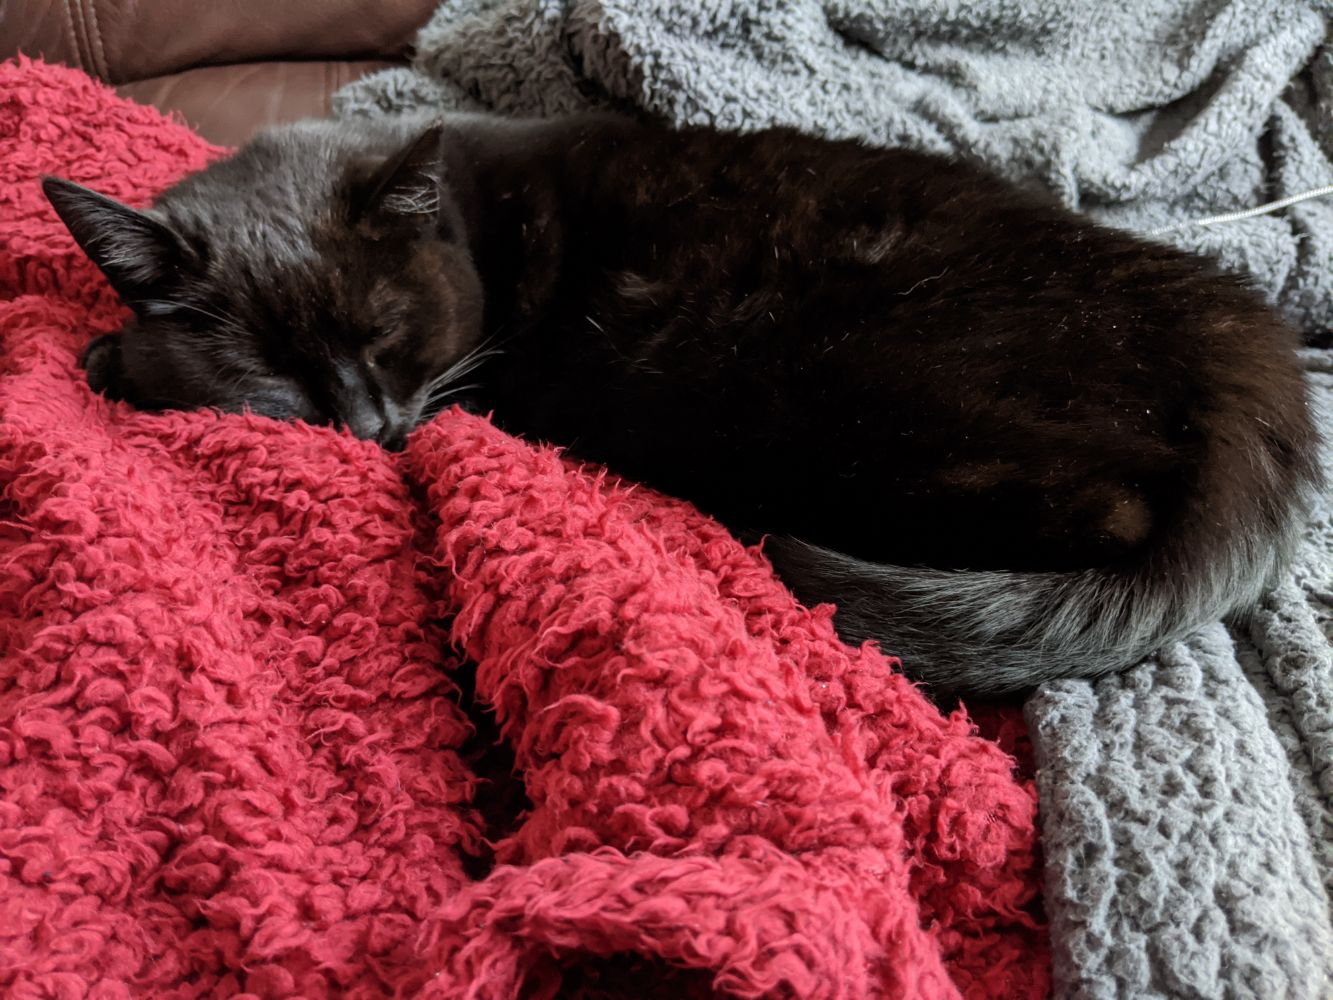 Black cat sleeping, half on a red blanket, half on a grey blanket